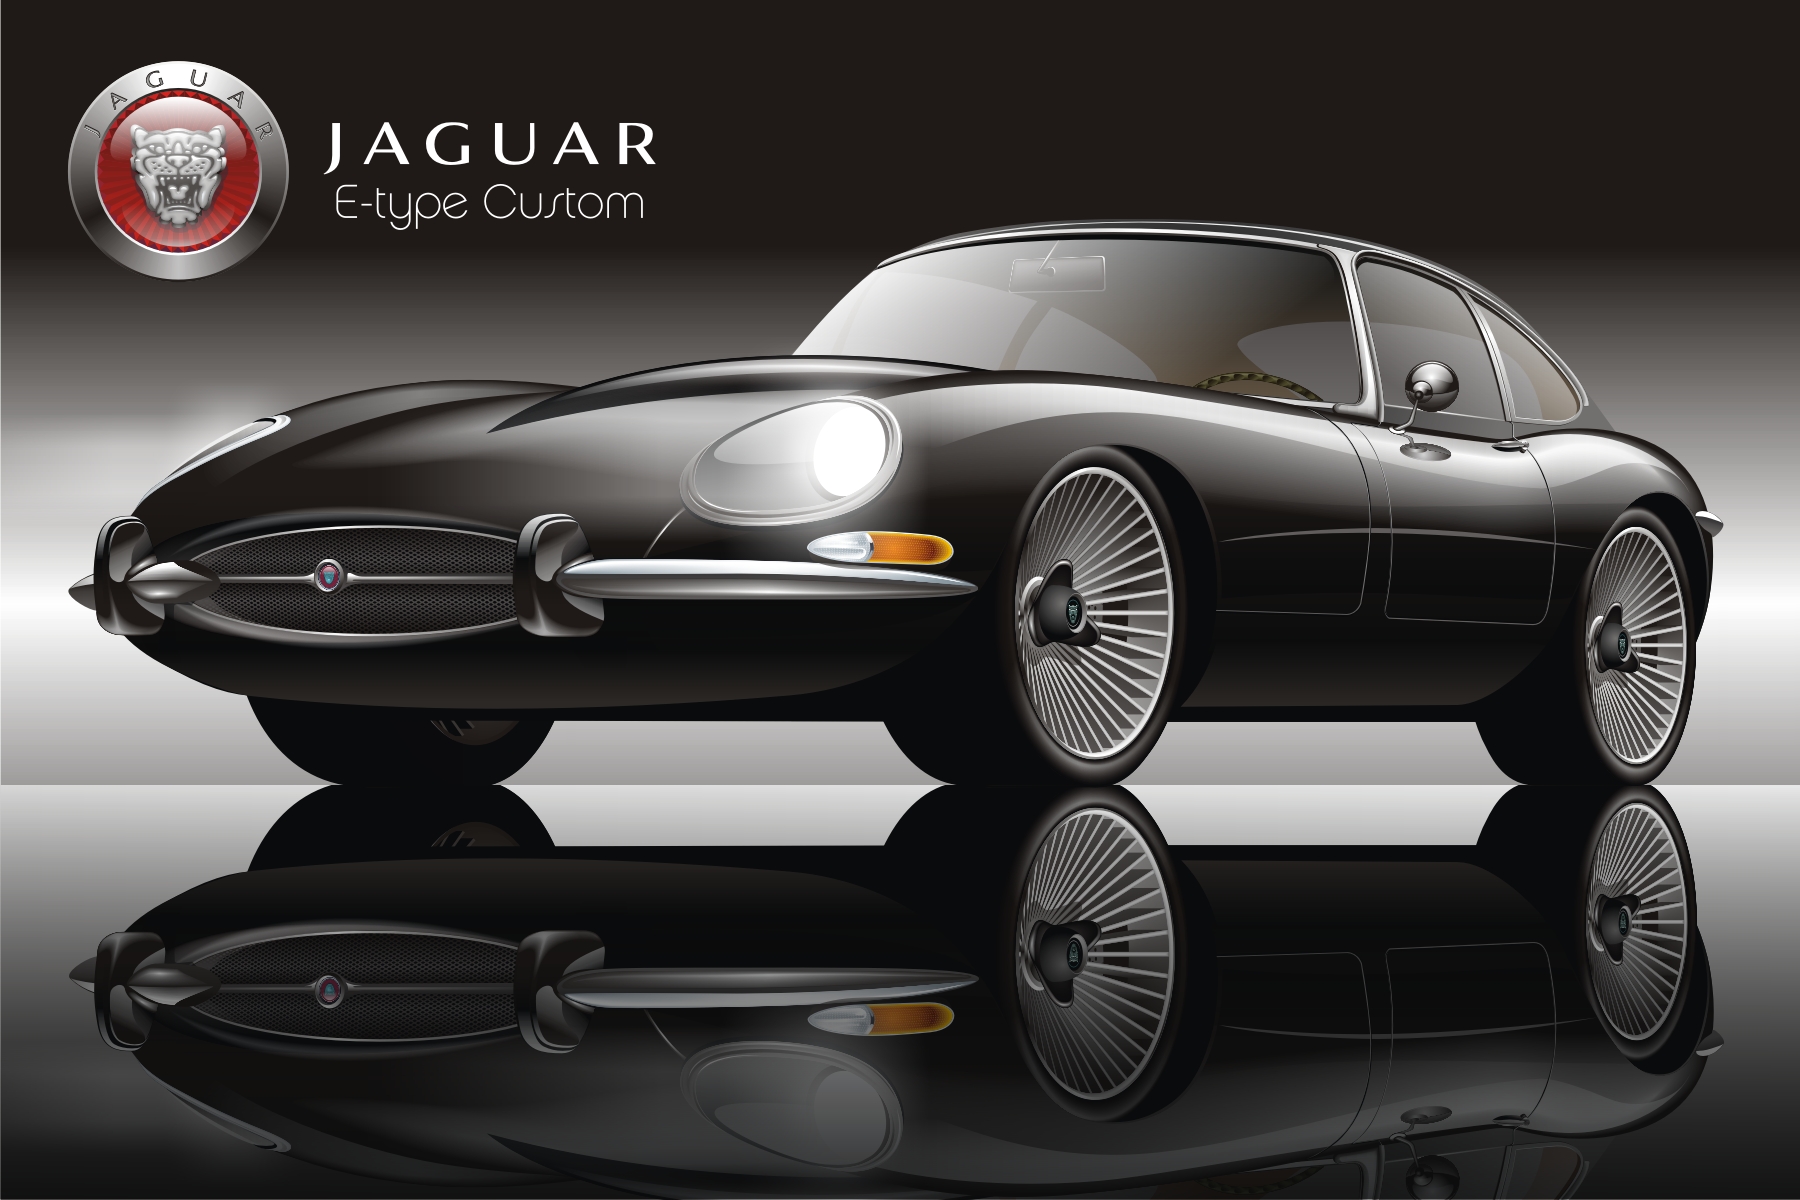 Black Jaguar Car Images Hd